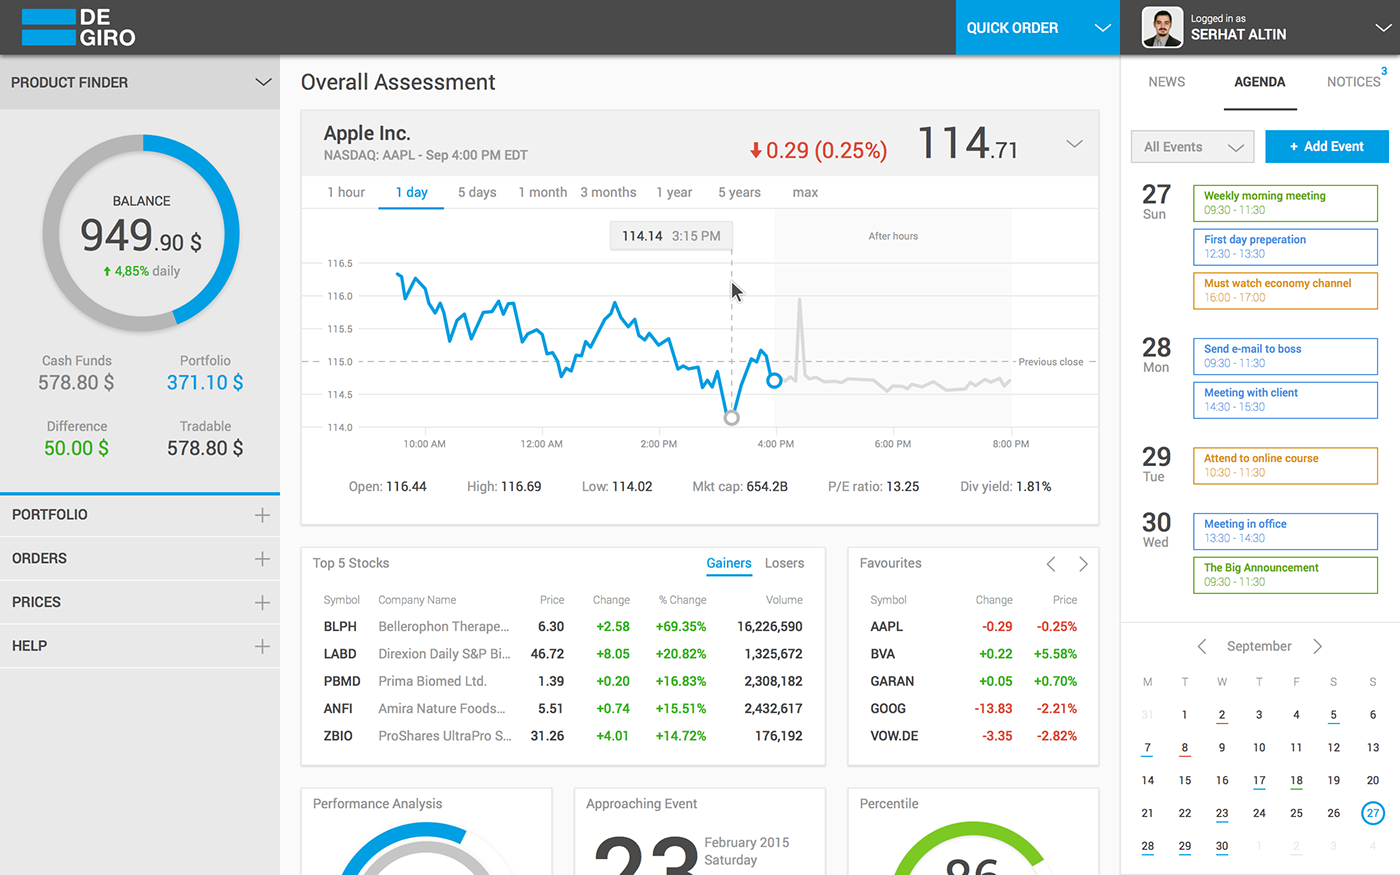 Webtrader finance economy stock Responsive UI Forex dashboard interaction ux IxD